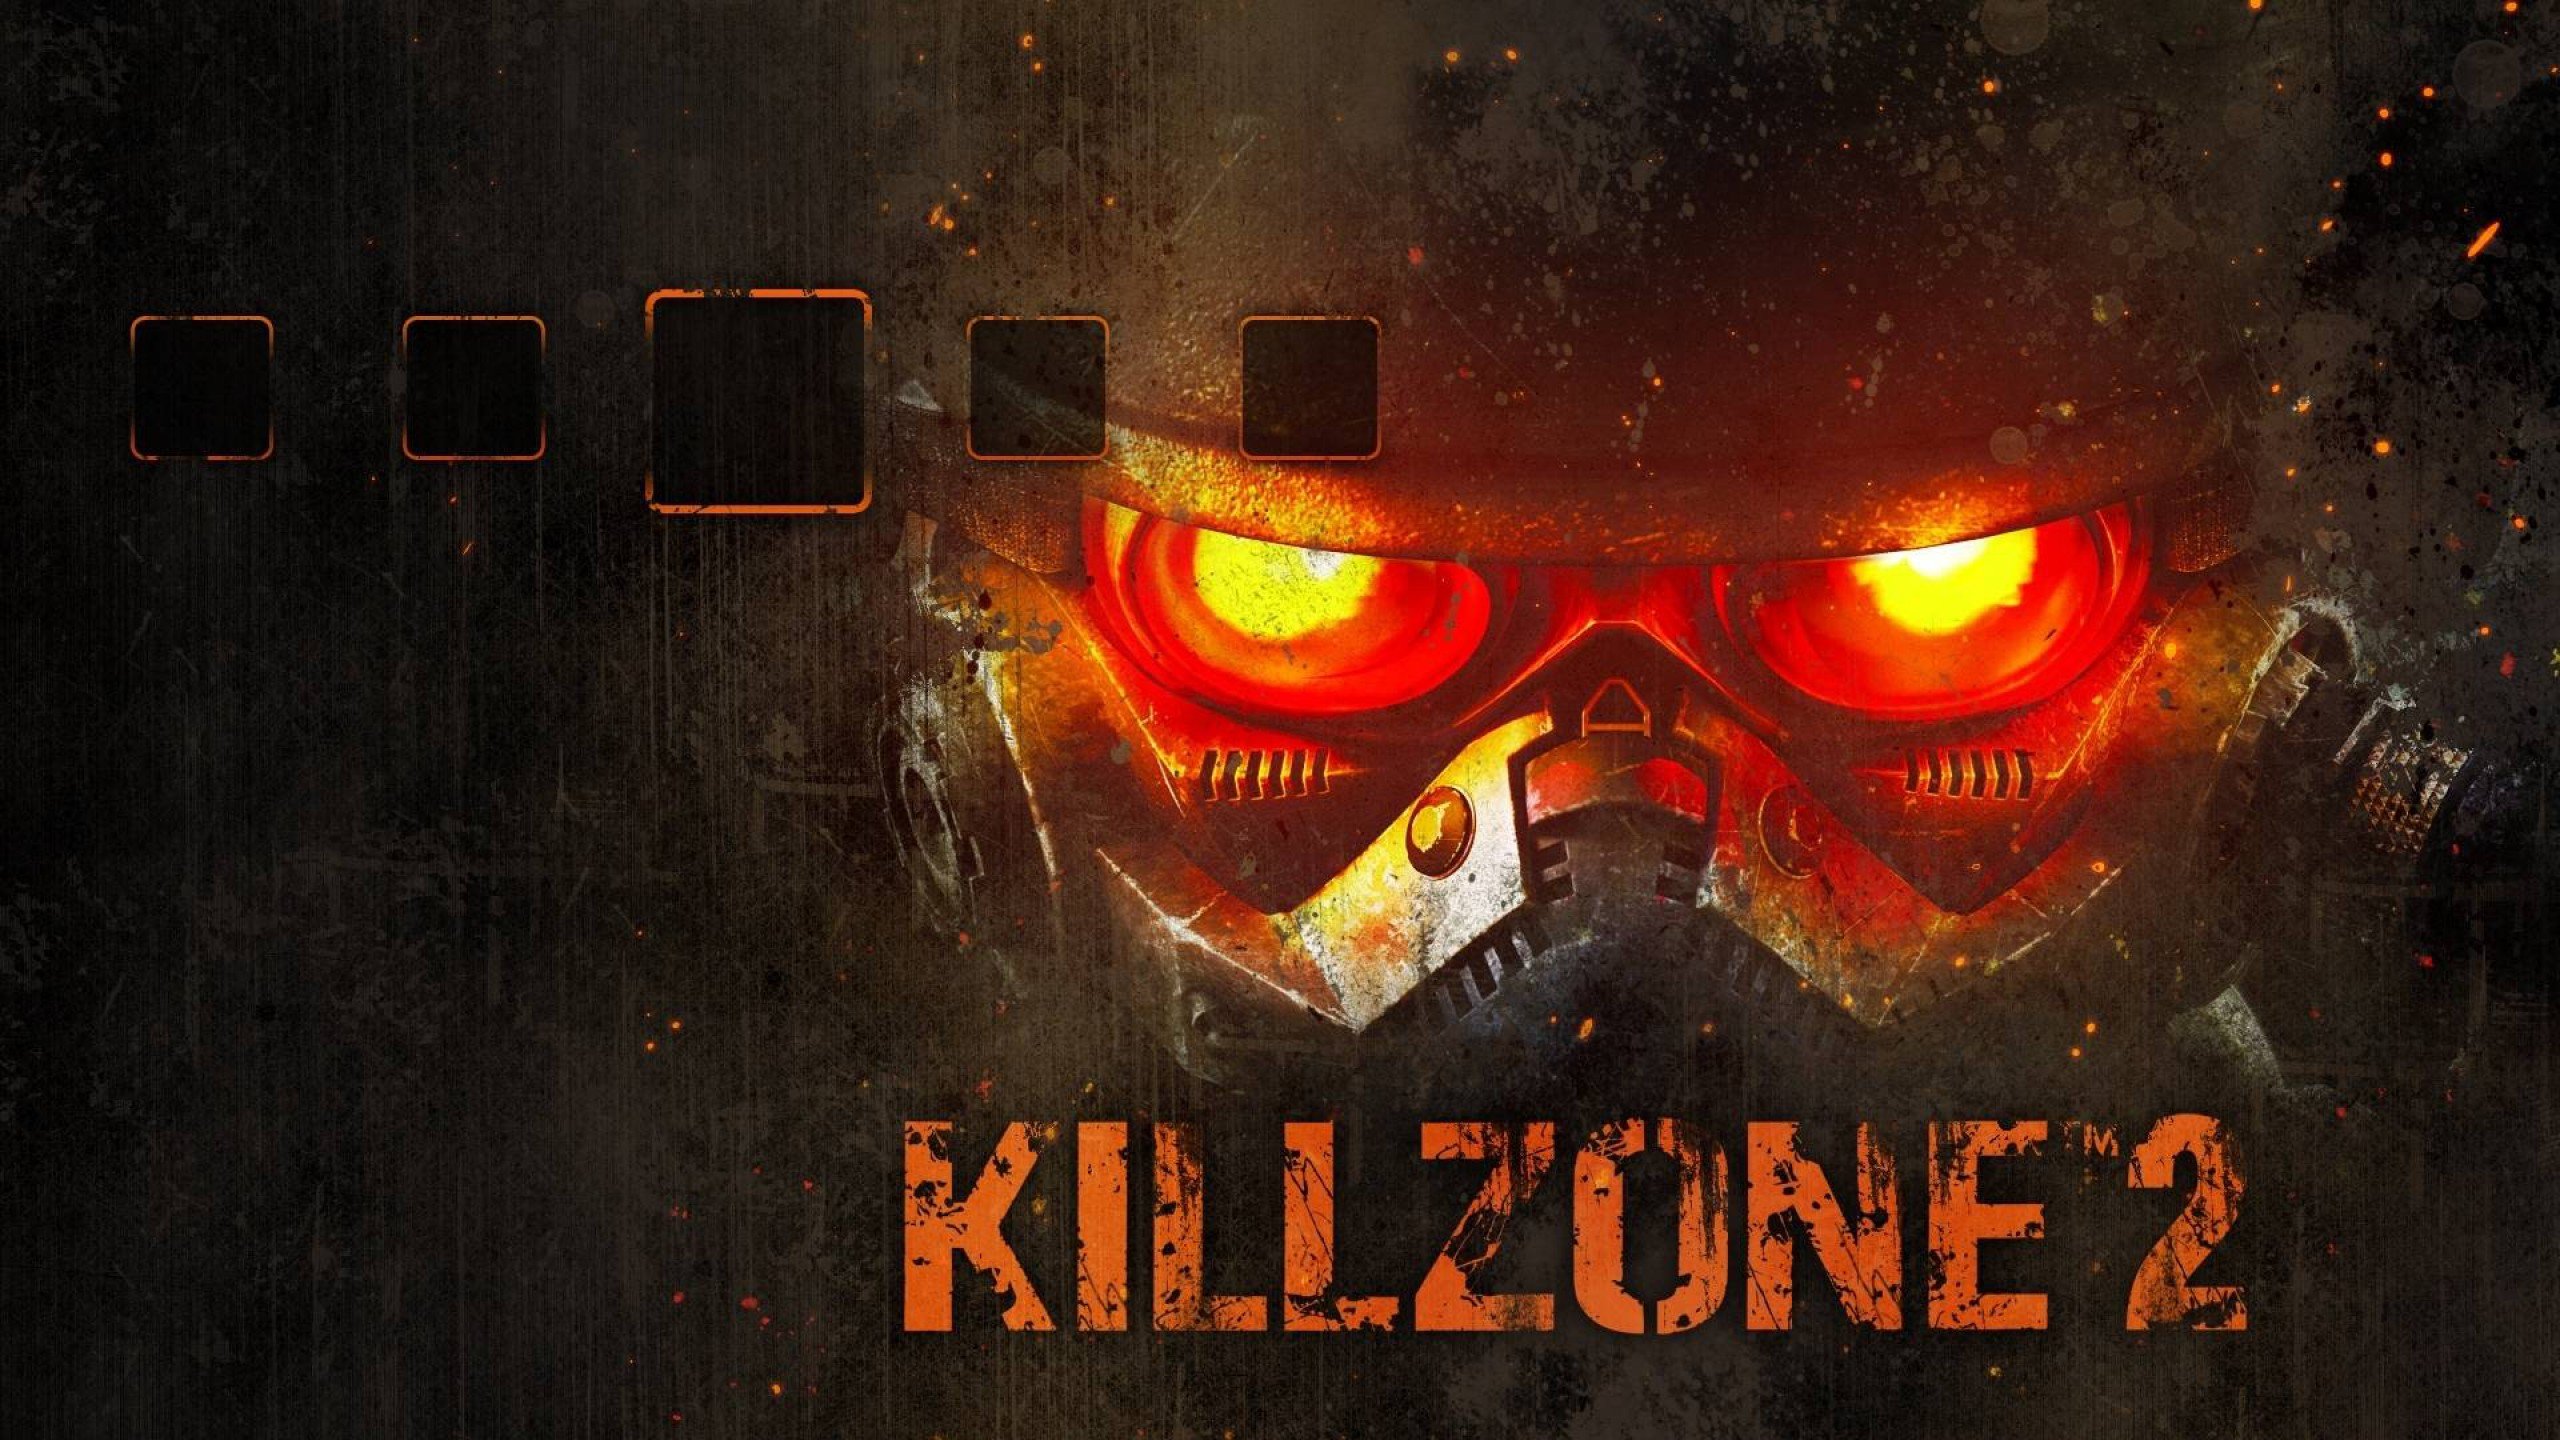 Killzone 2 wallpaper 2560x1440 desktop background